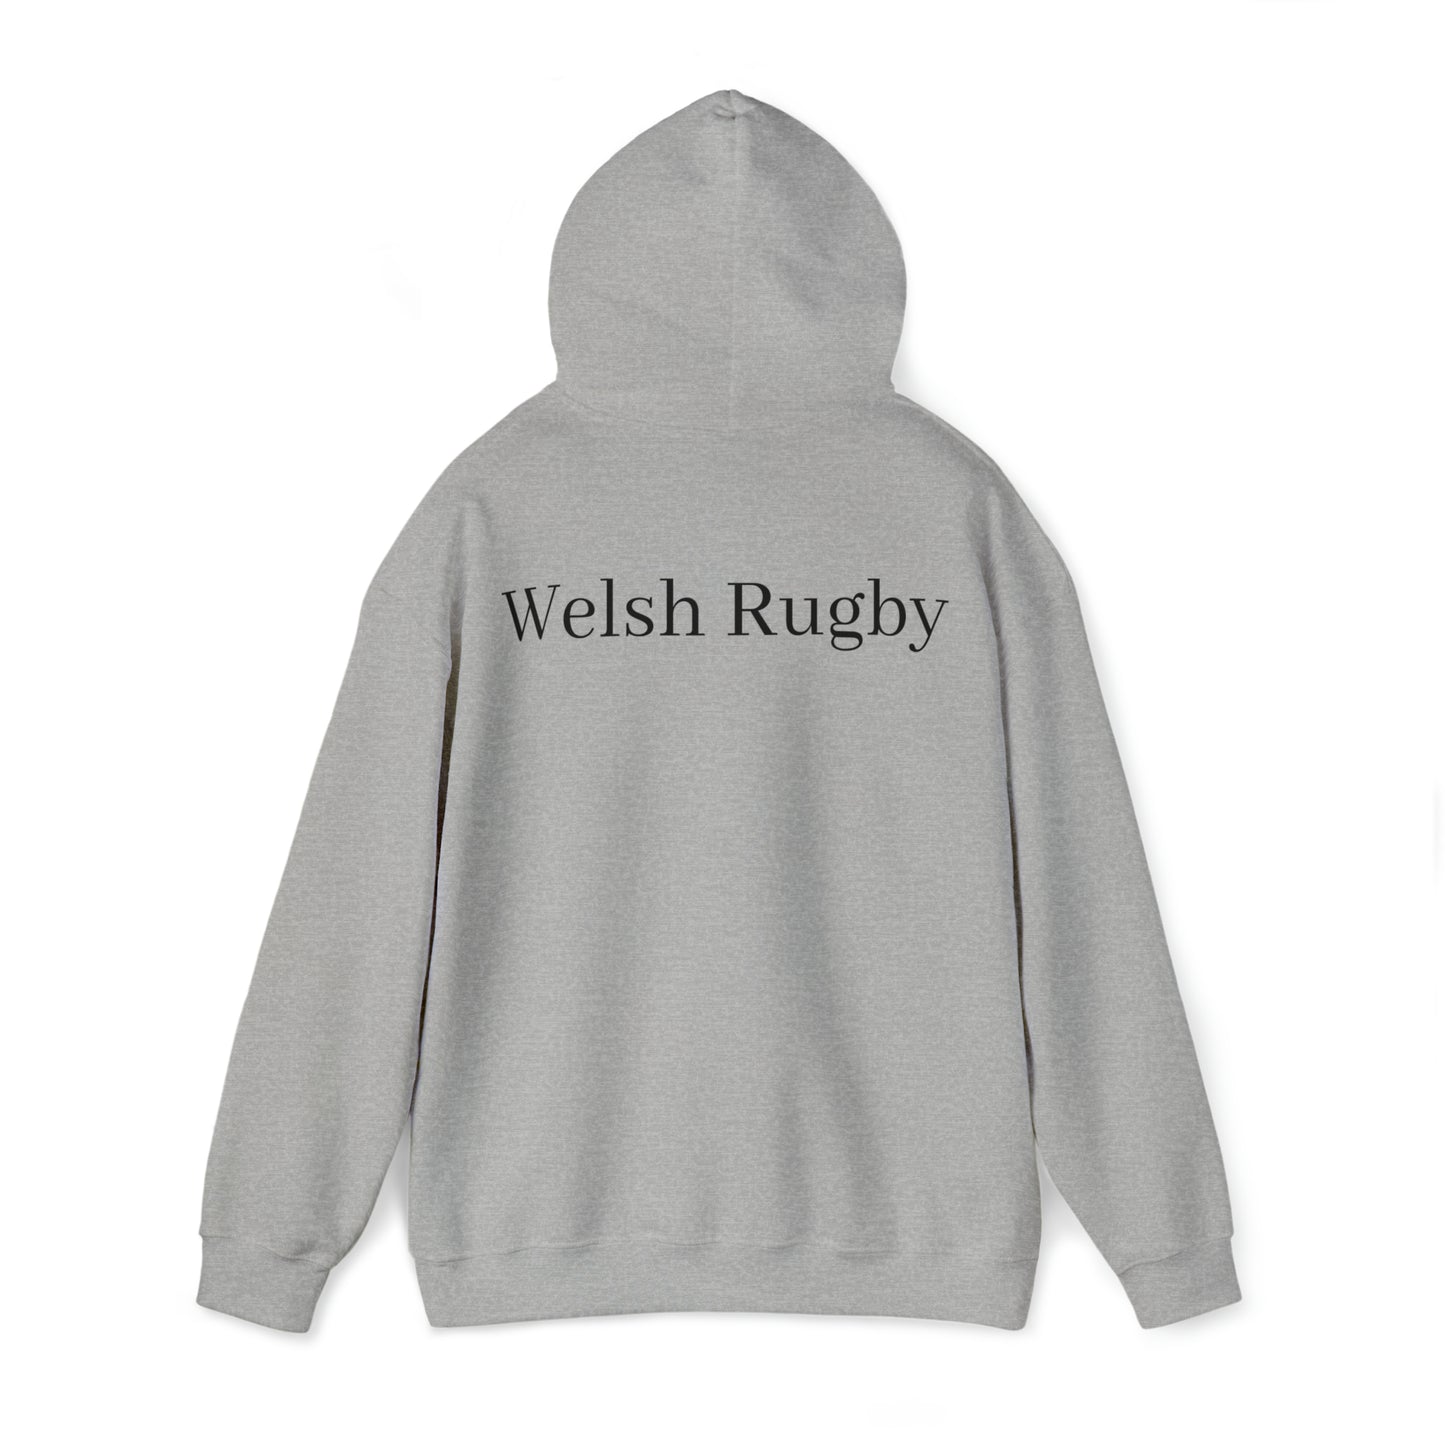 Welsh Dragon - light hoodies